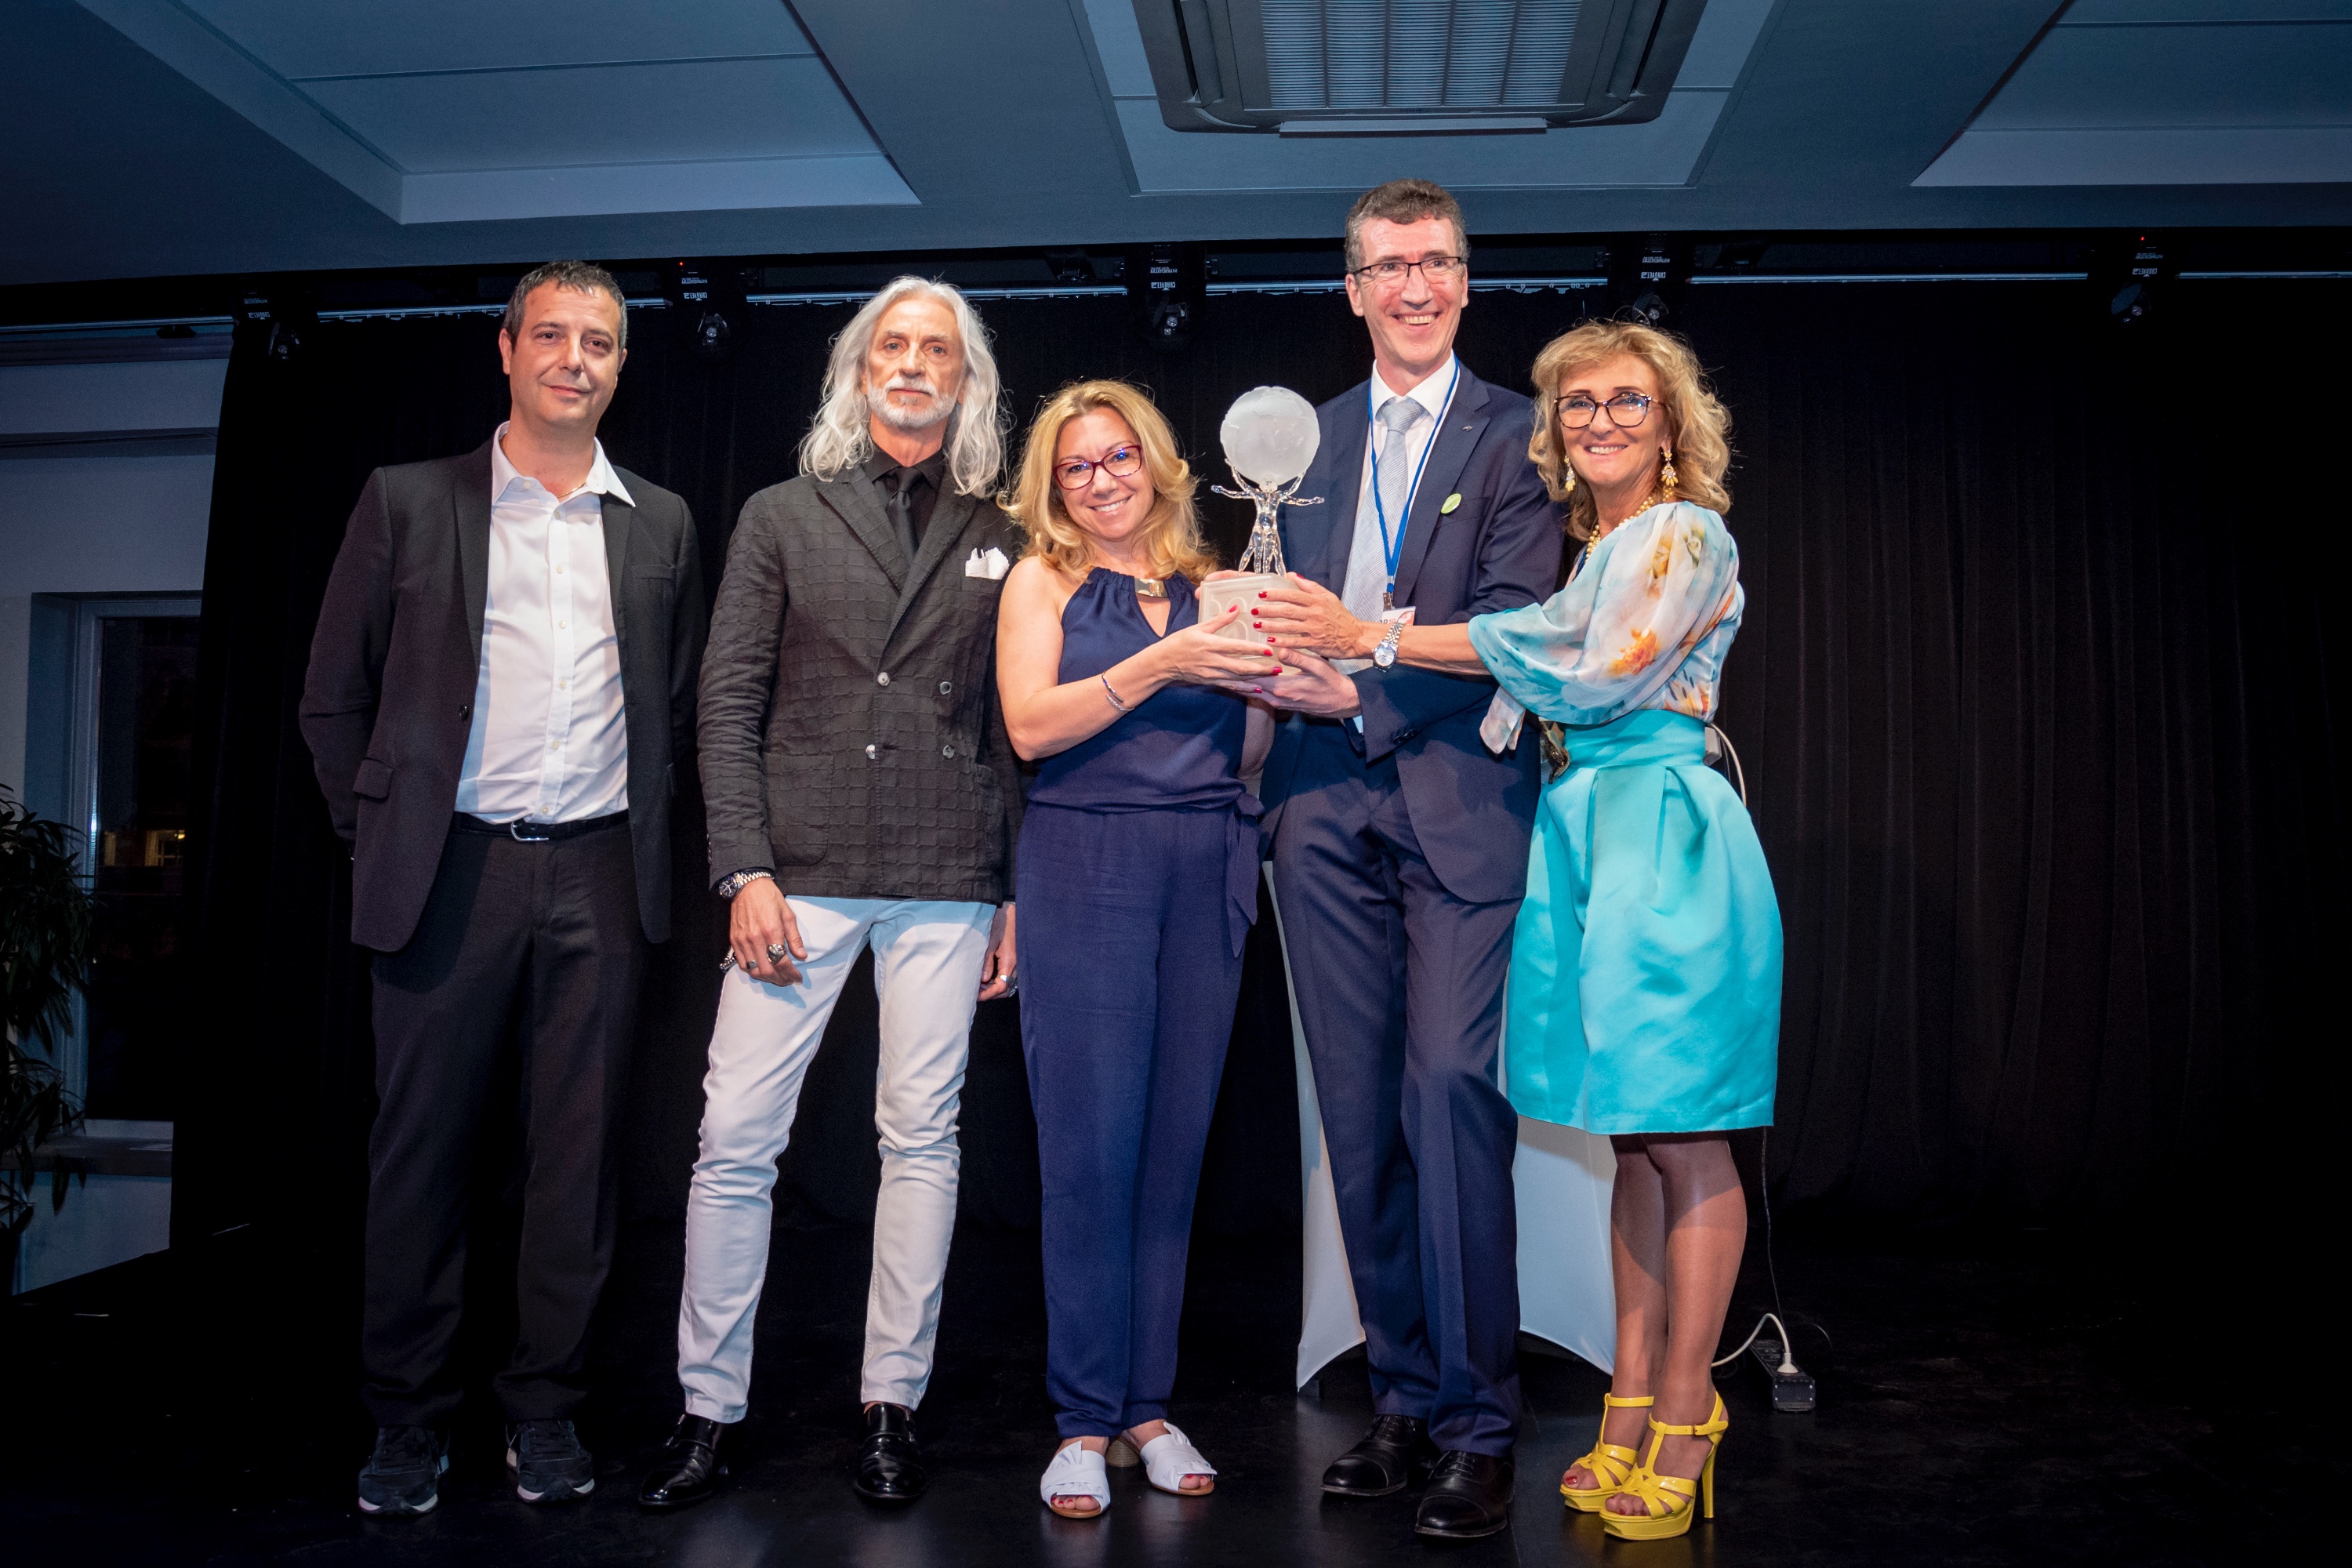 Atlas Award 2022: Nominate Your Business Hero in Hungary